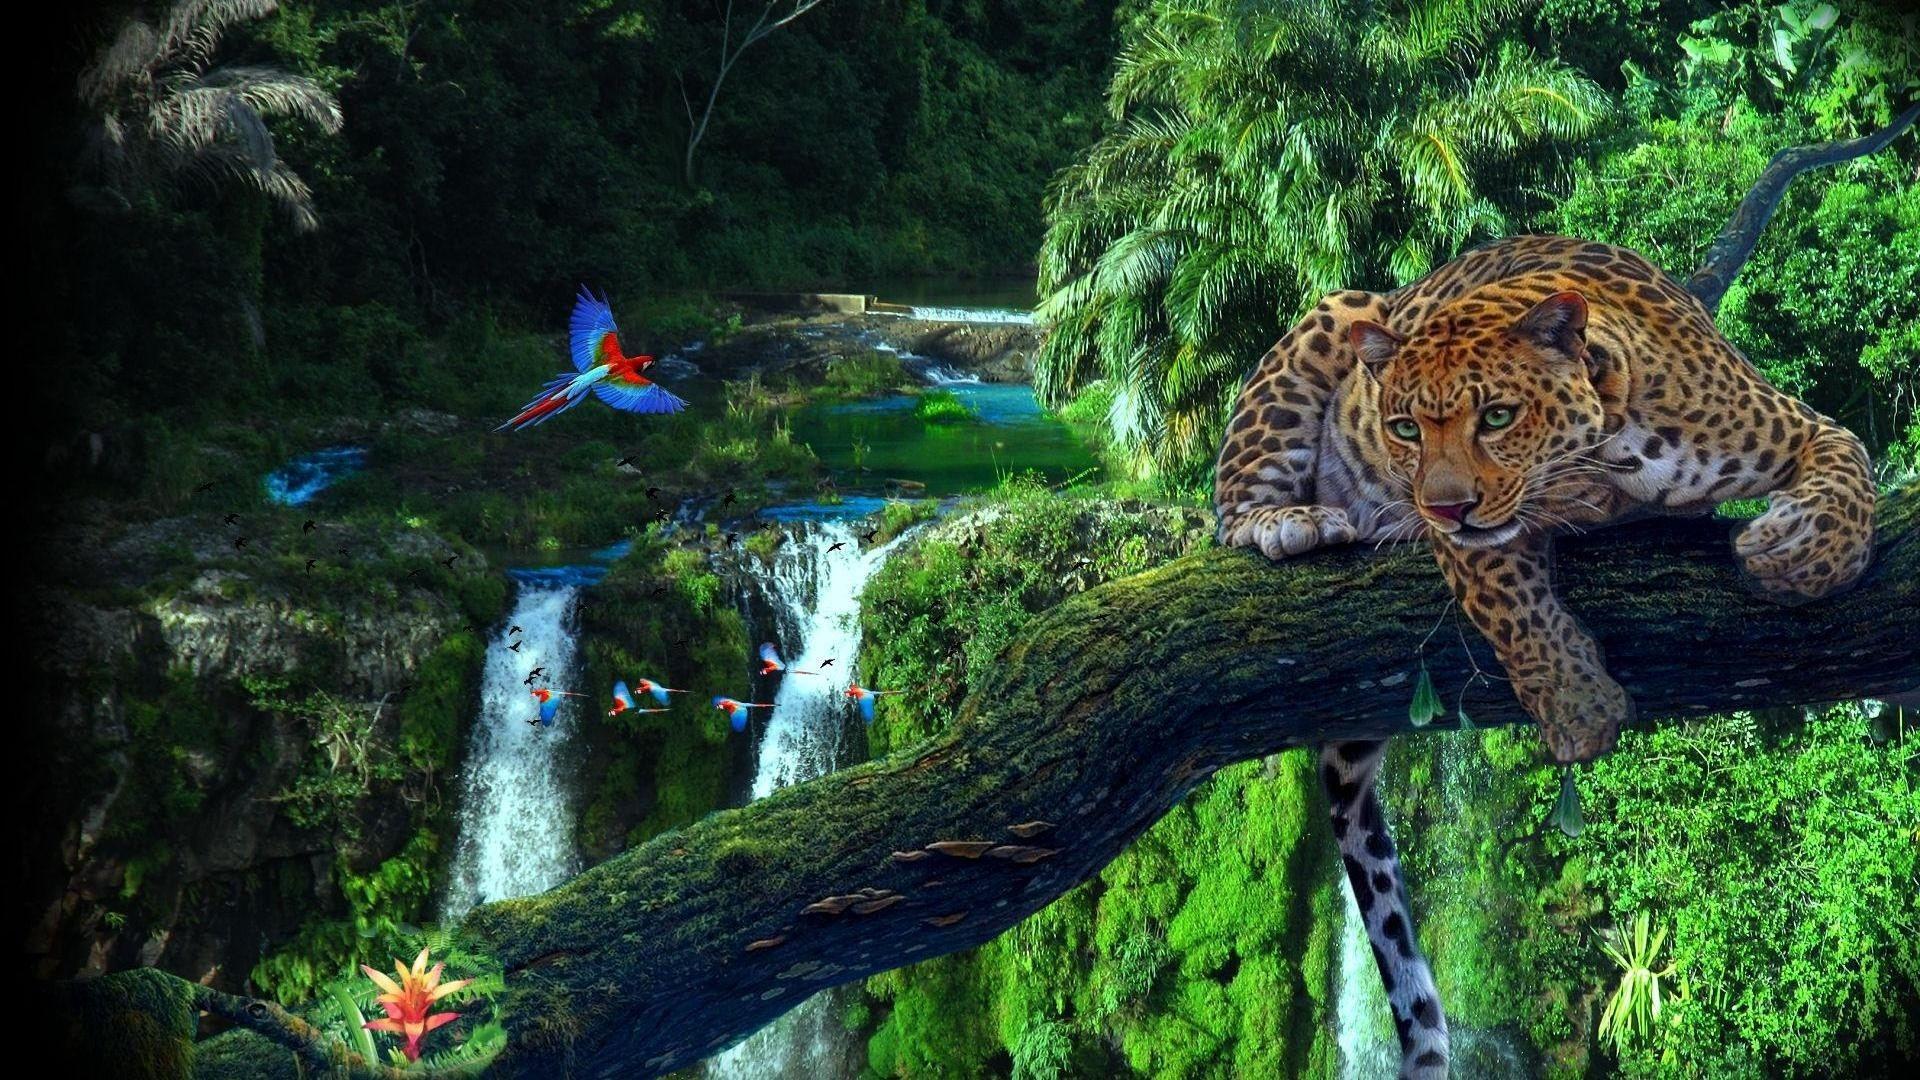 Amazon Rainforest Wallpaper Image #vIM. Rainforest animals